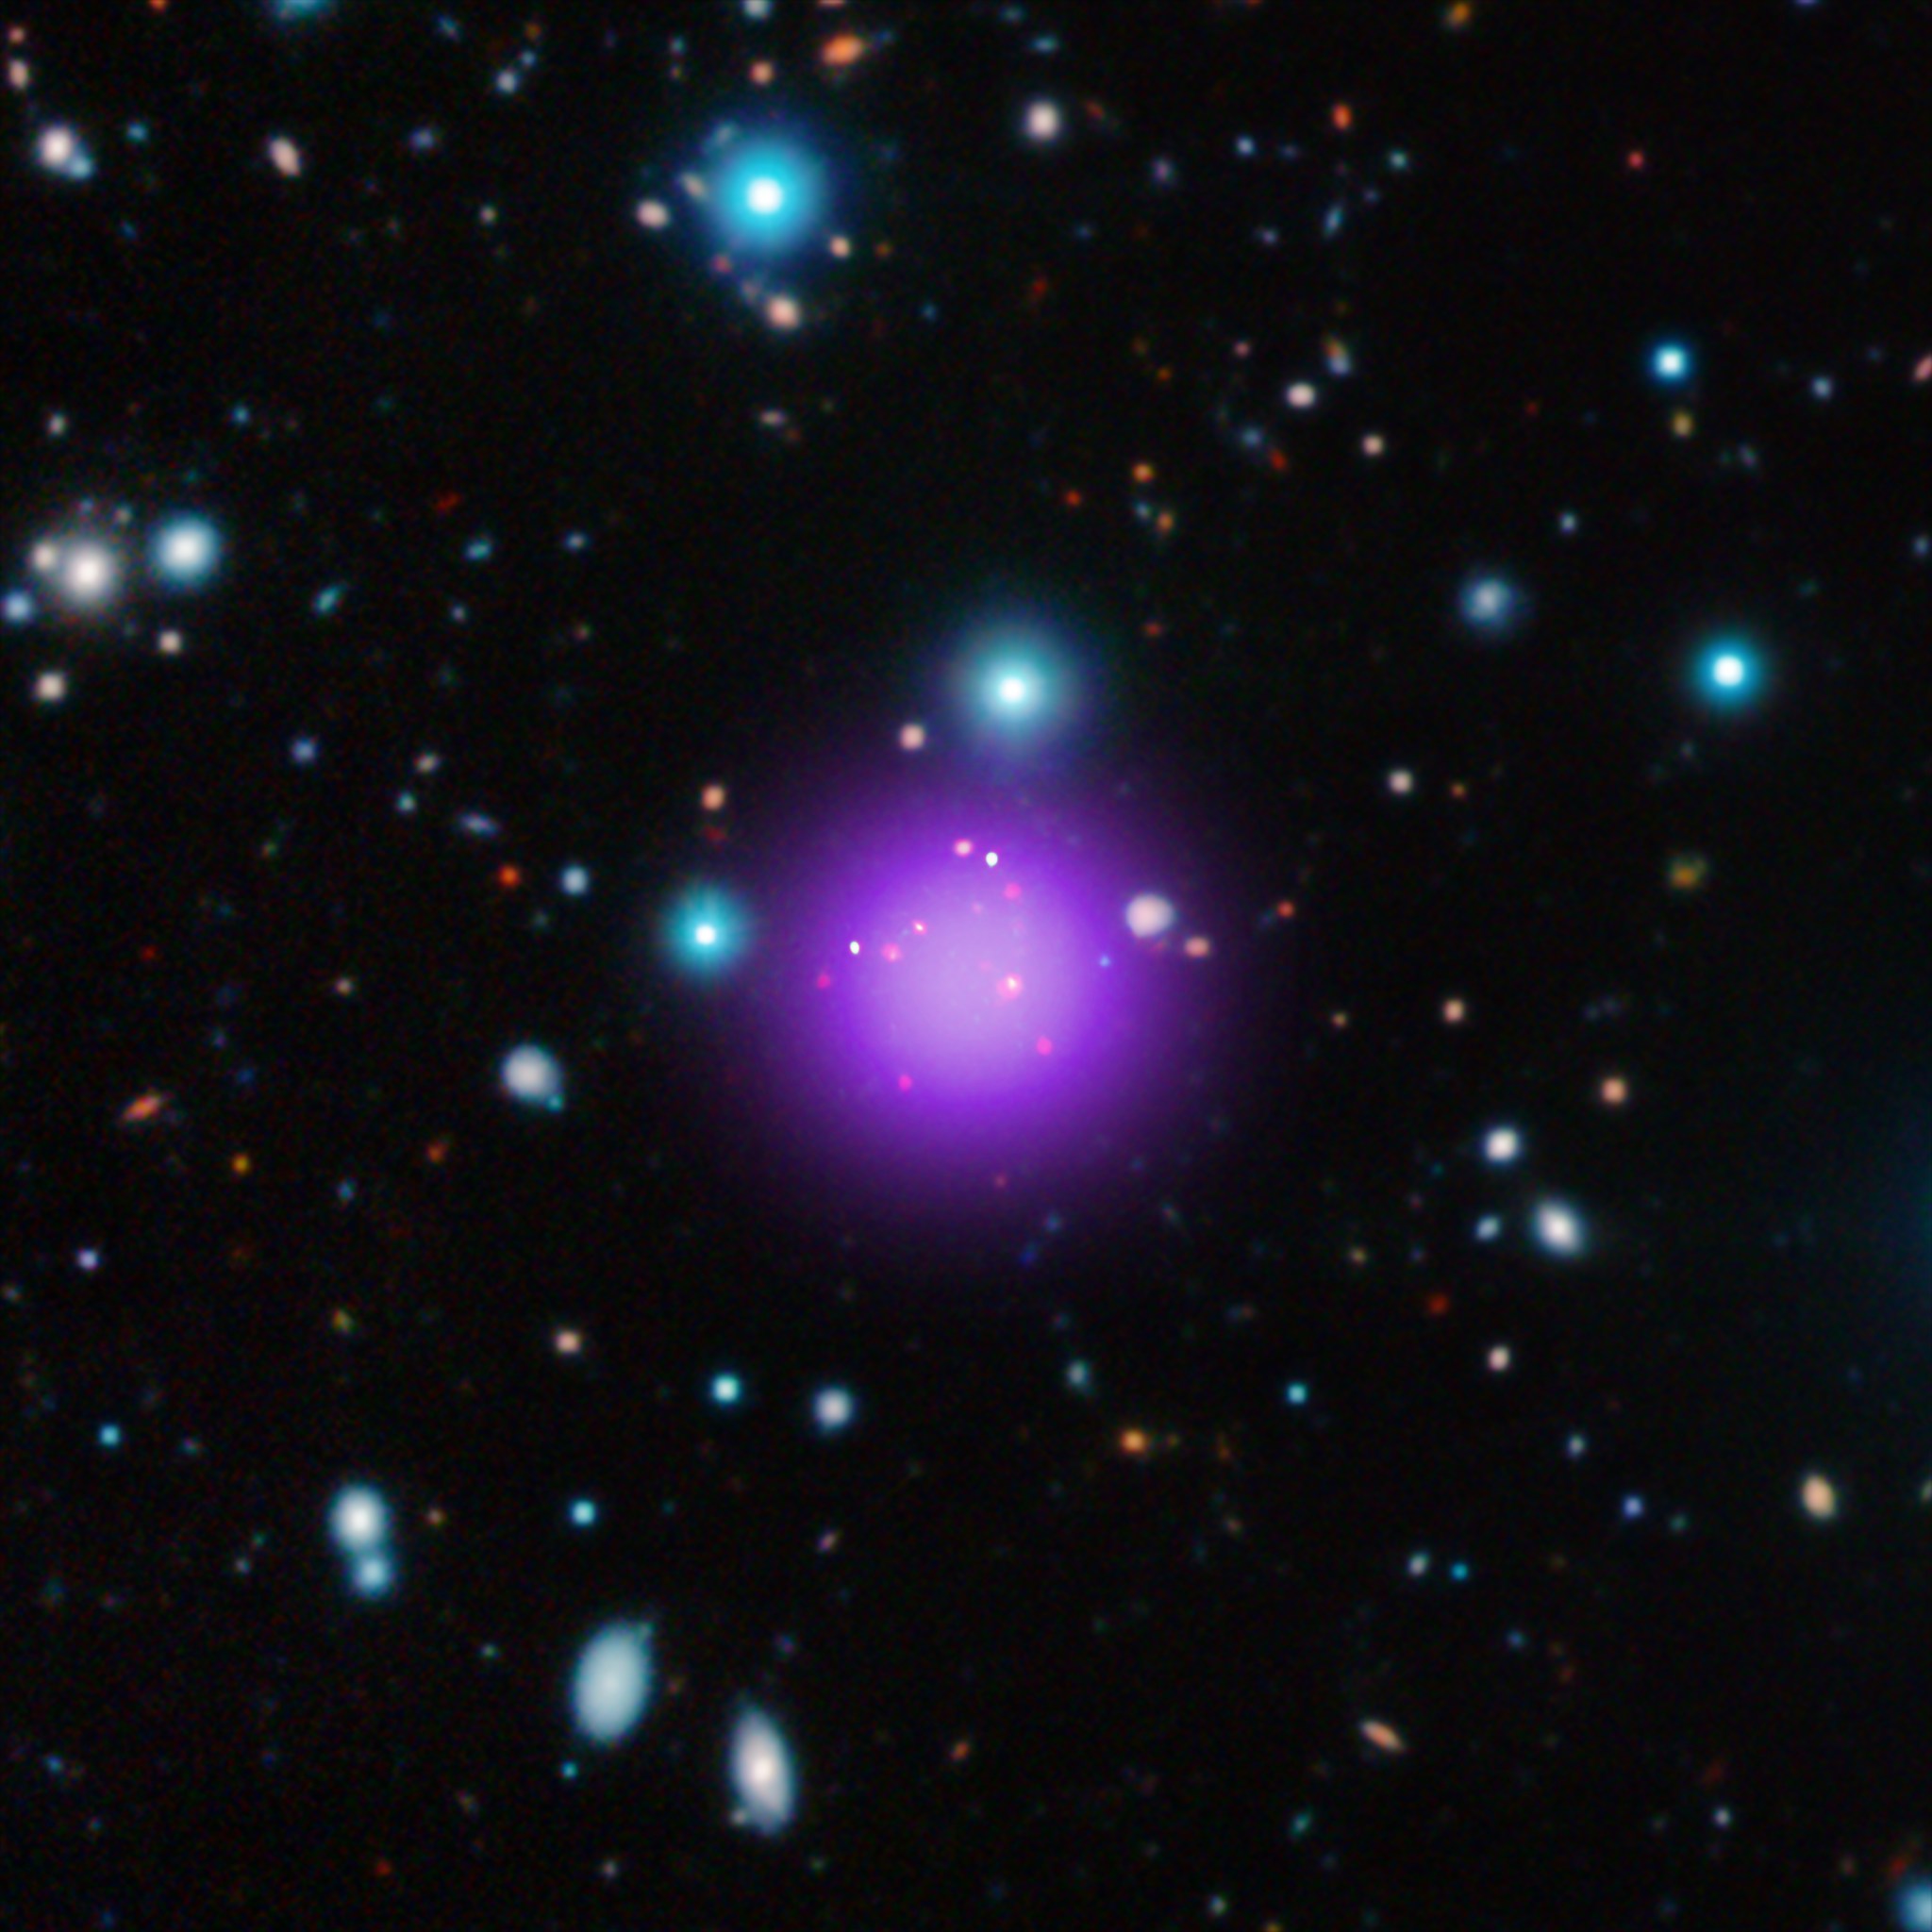 Galaxy Cluster CL J1001+0220